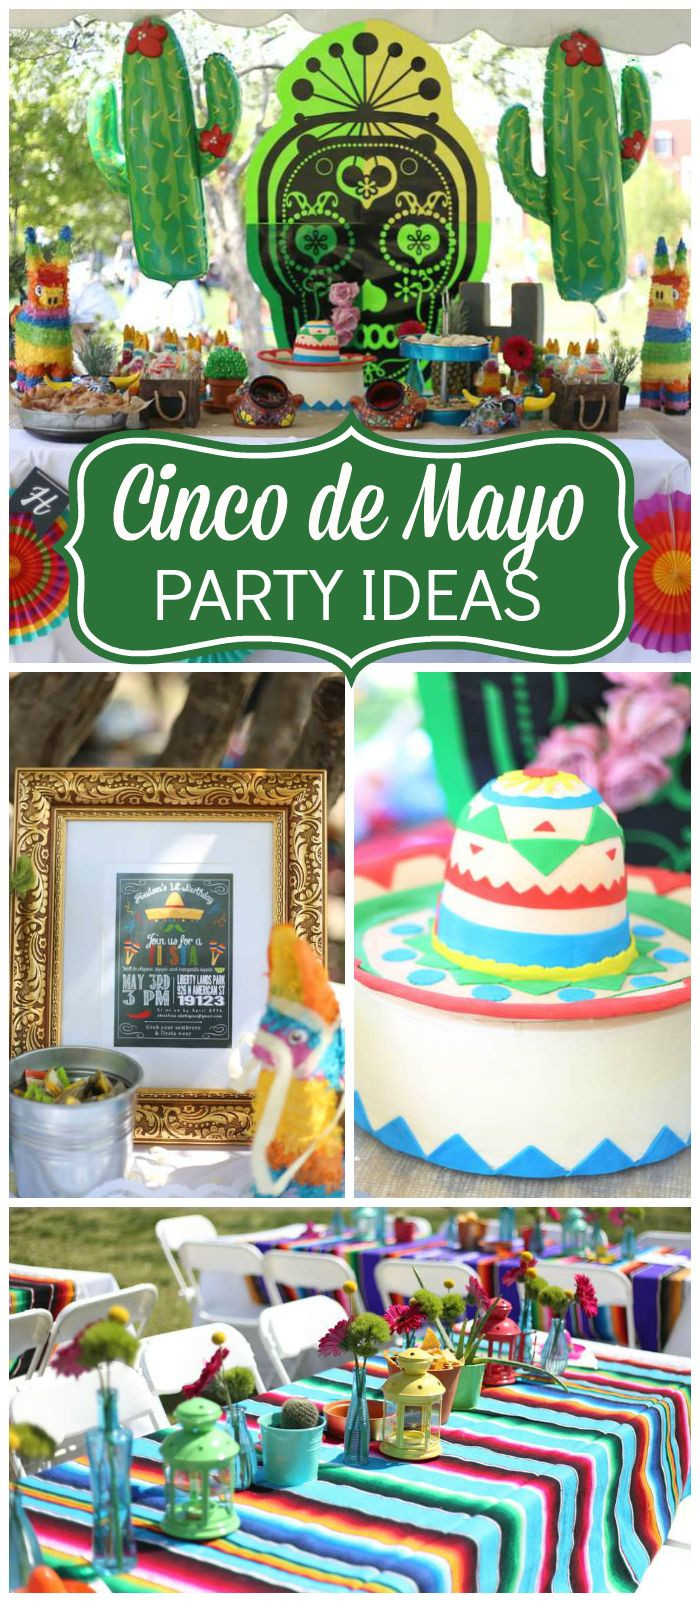 Ideas For Cinco De Mayo Party
 38 best Lia s fiesta images on Pinterest